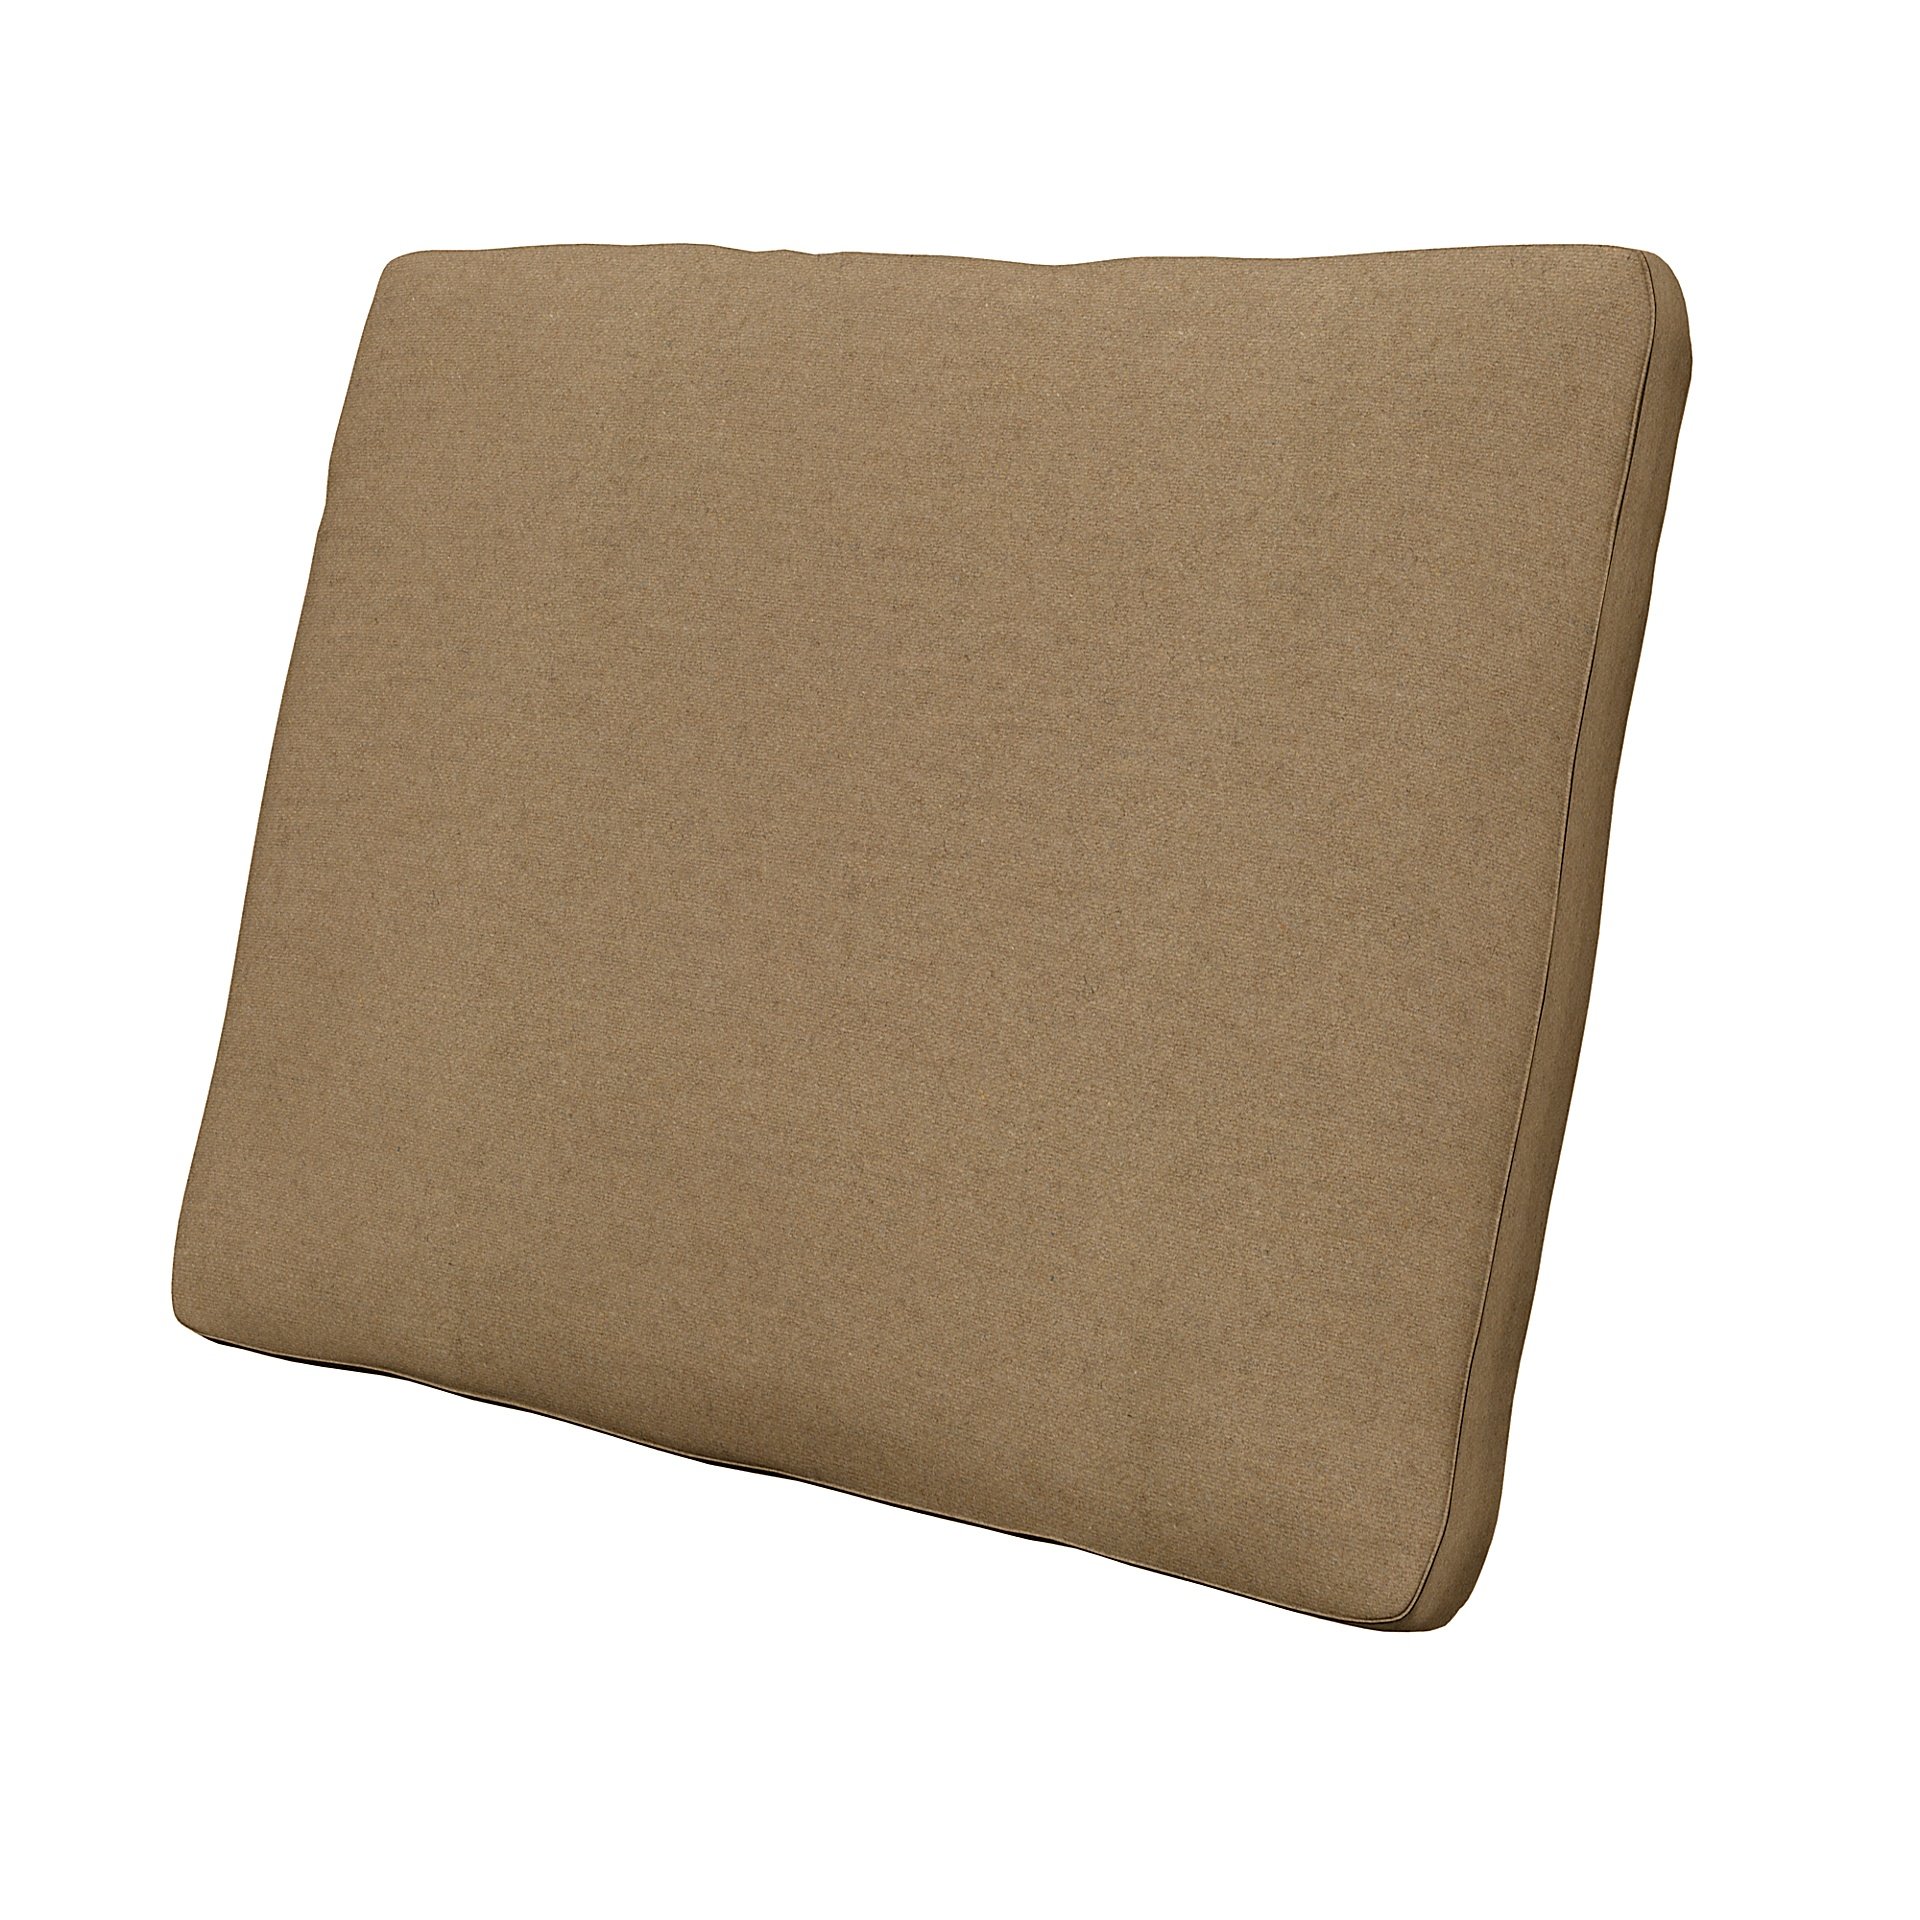 IKEA - Cushion Cover Karlstad 58x48x5 cm, Sand, Wool - Bemz